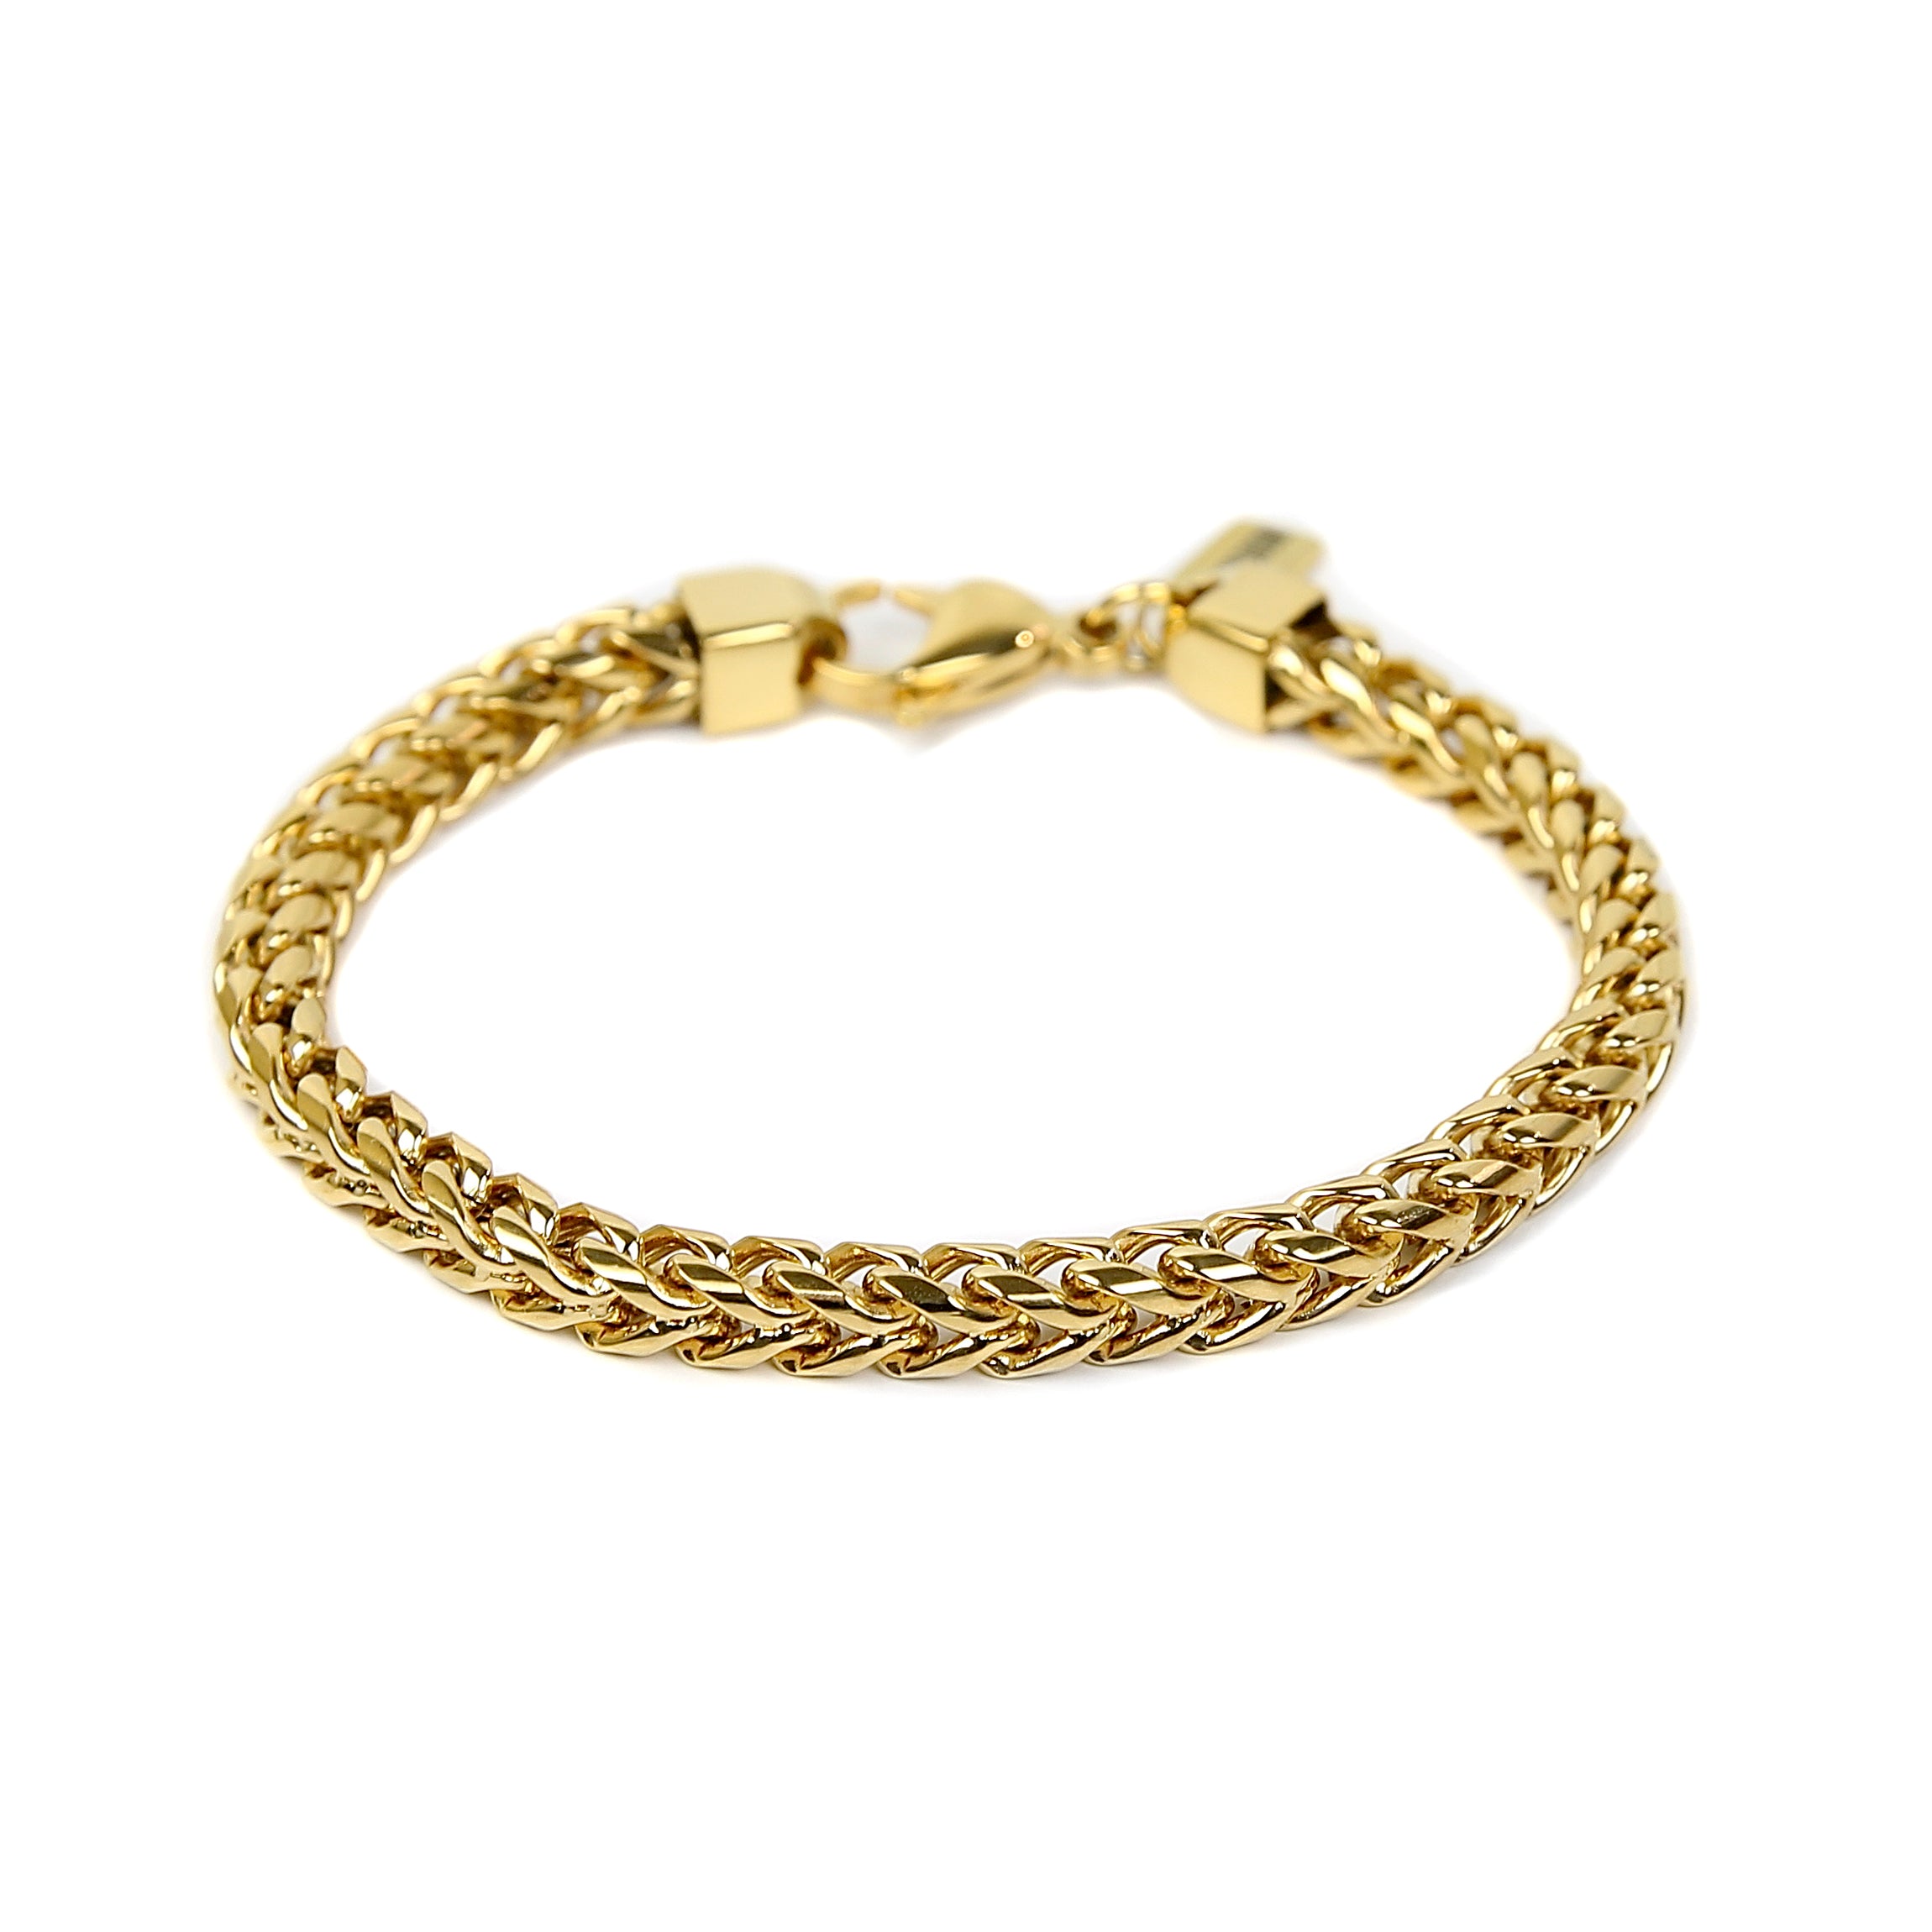 Franco Chain Bracelet - Gold 6mm